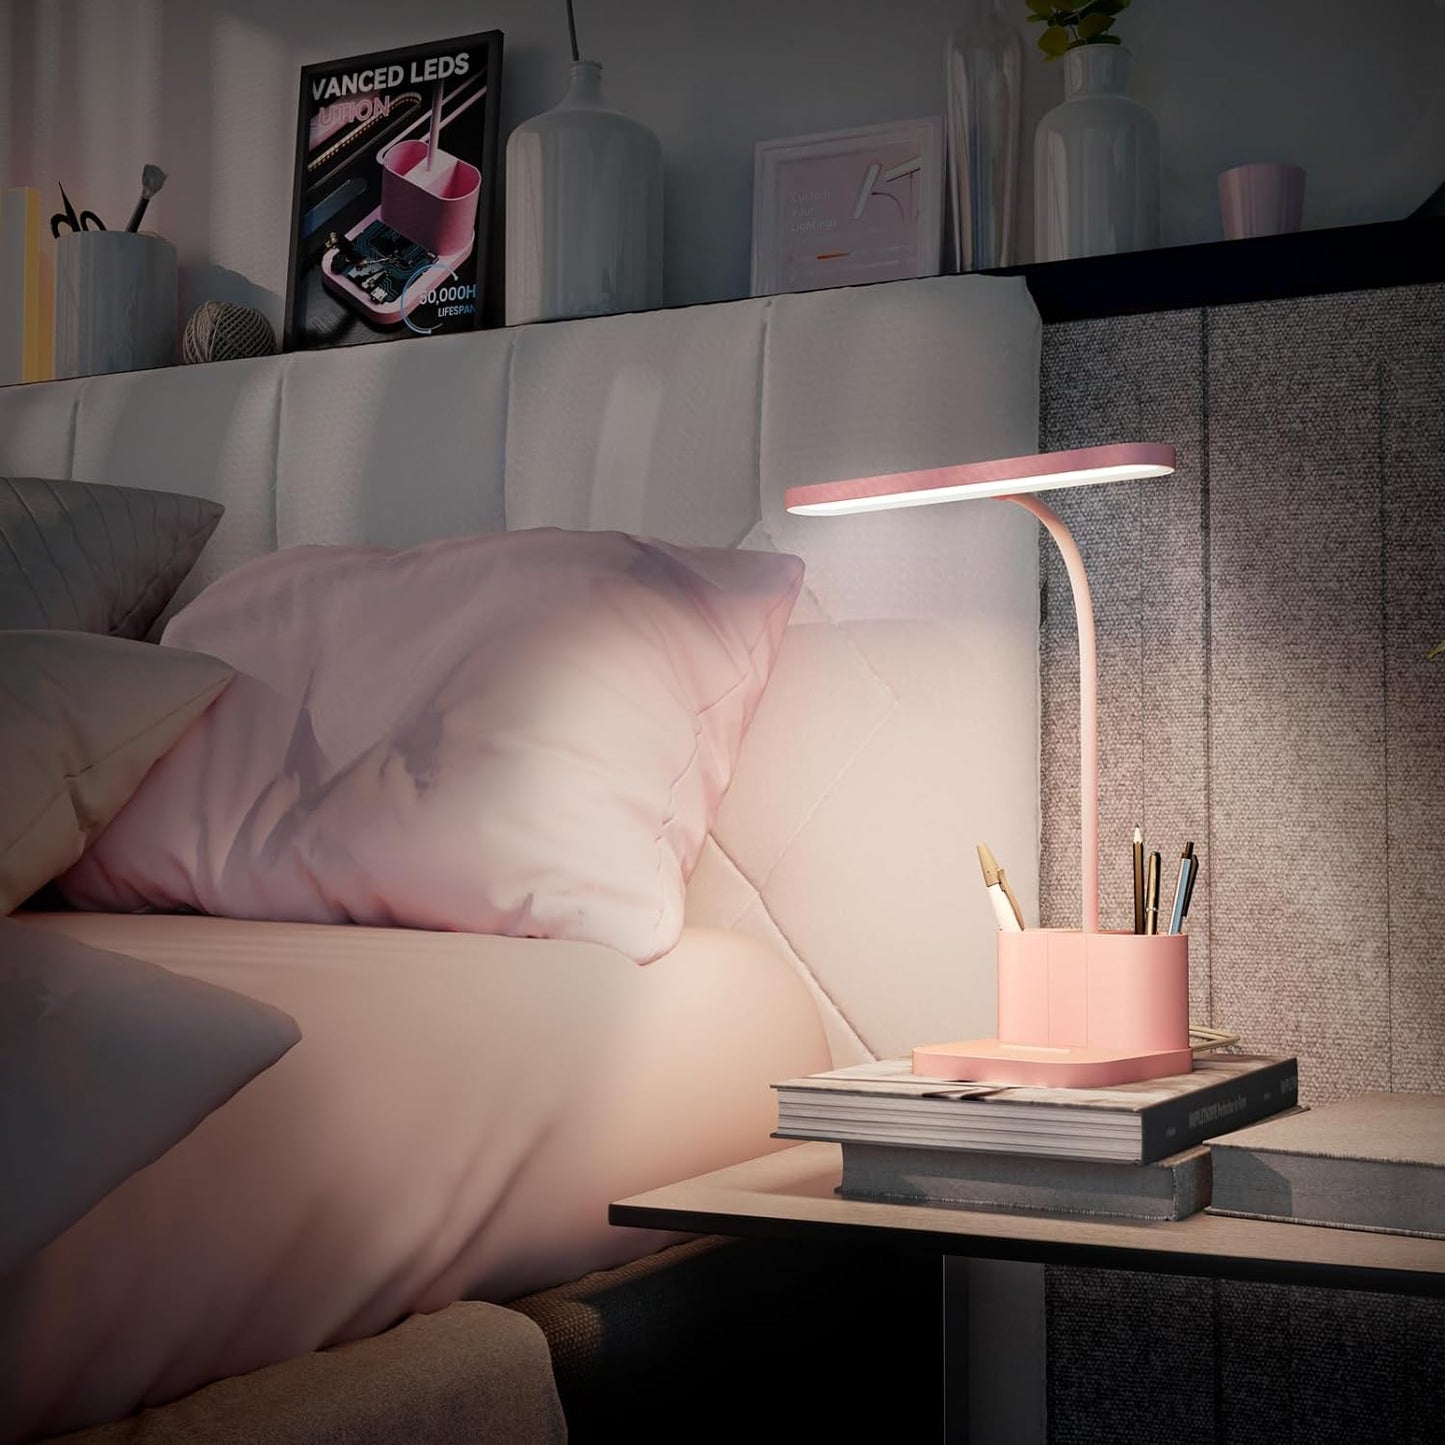 Pink Desk Lamp